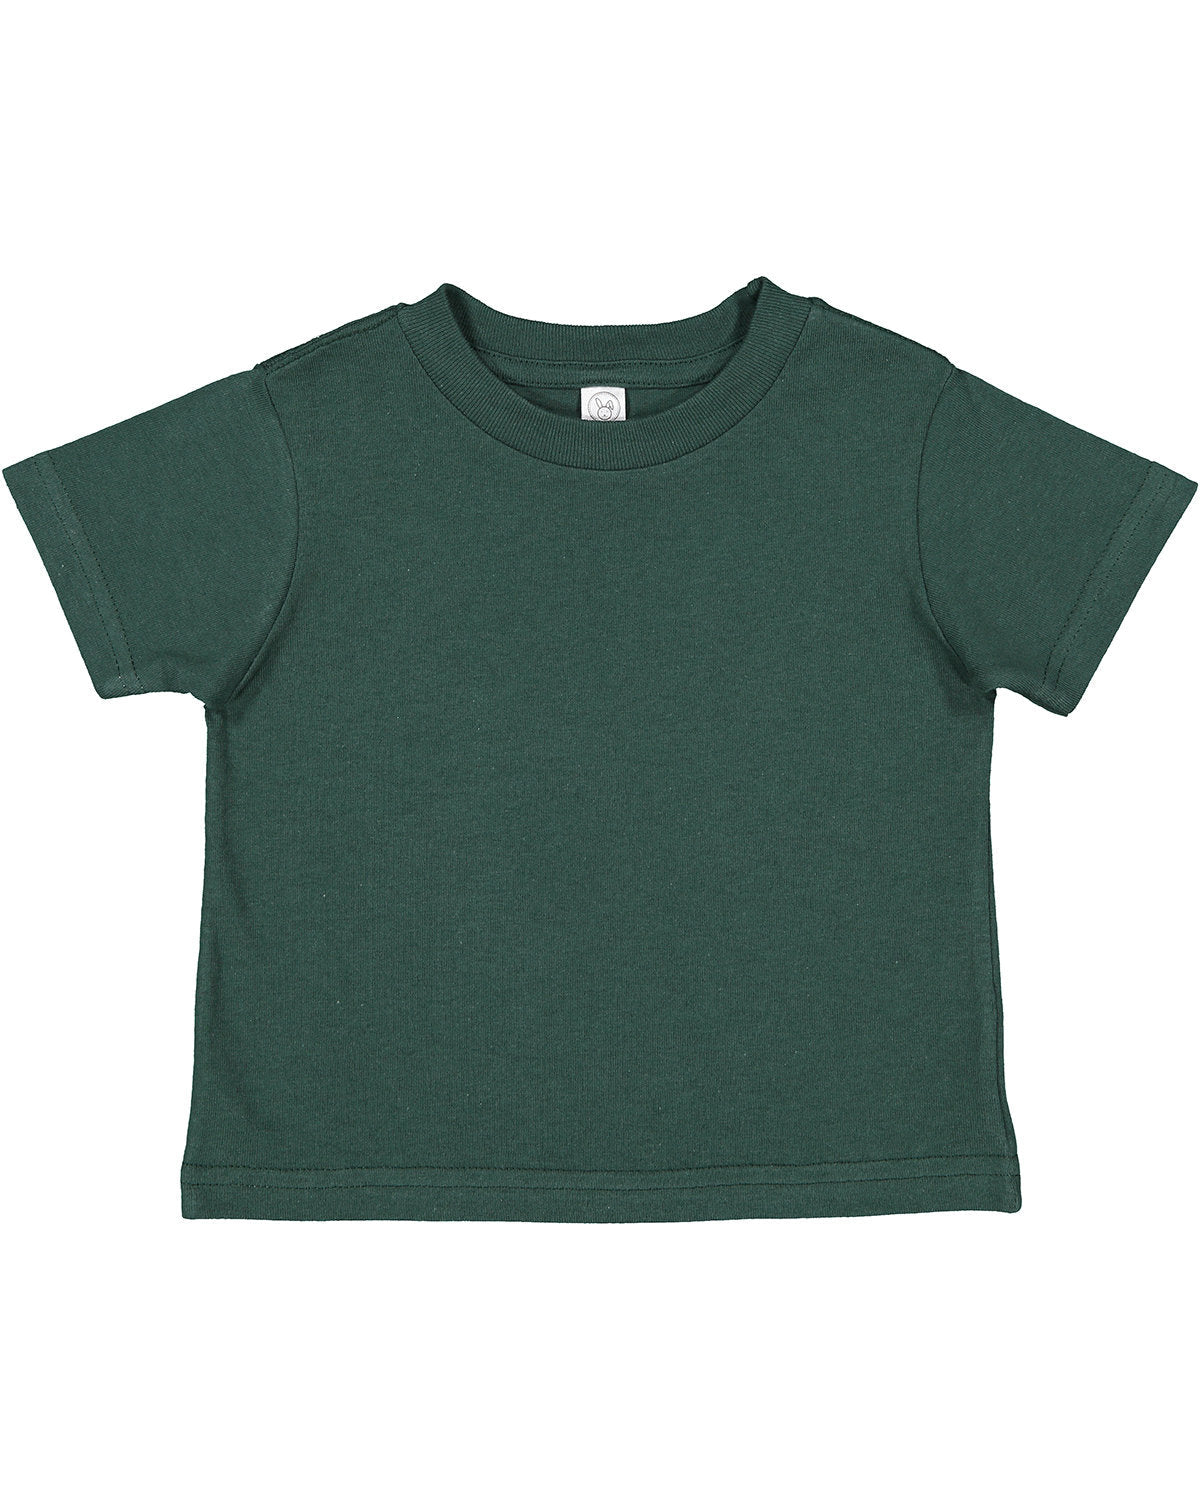 Rabbit Skins Toddler Cotton Jersey T-Shirt 2T / Forest